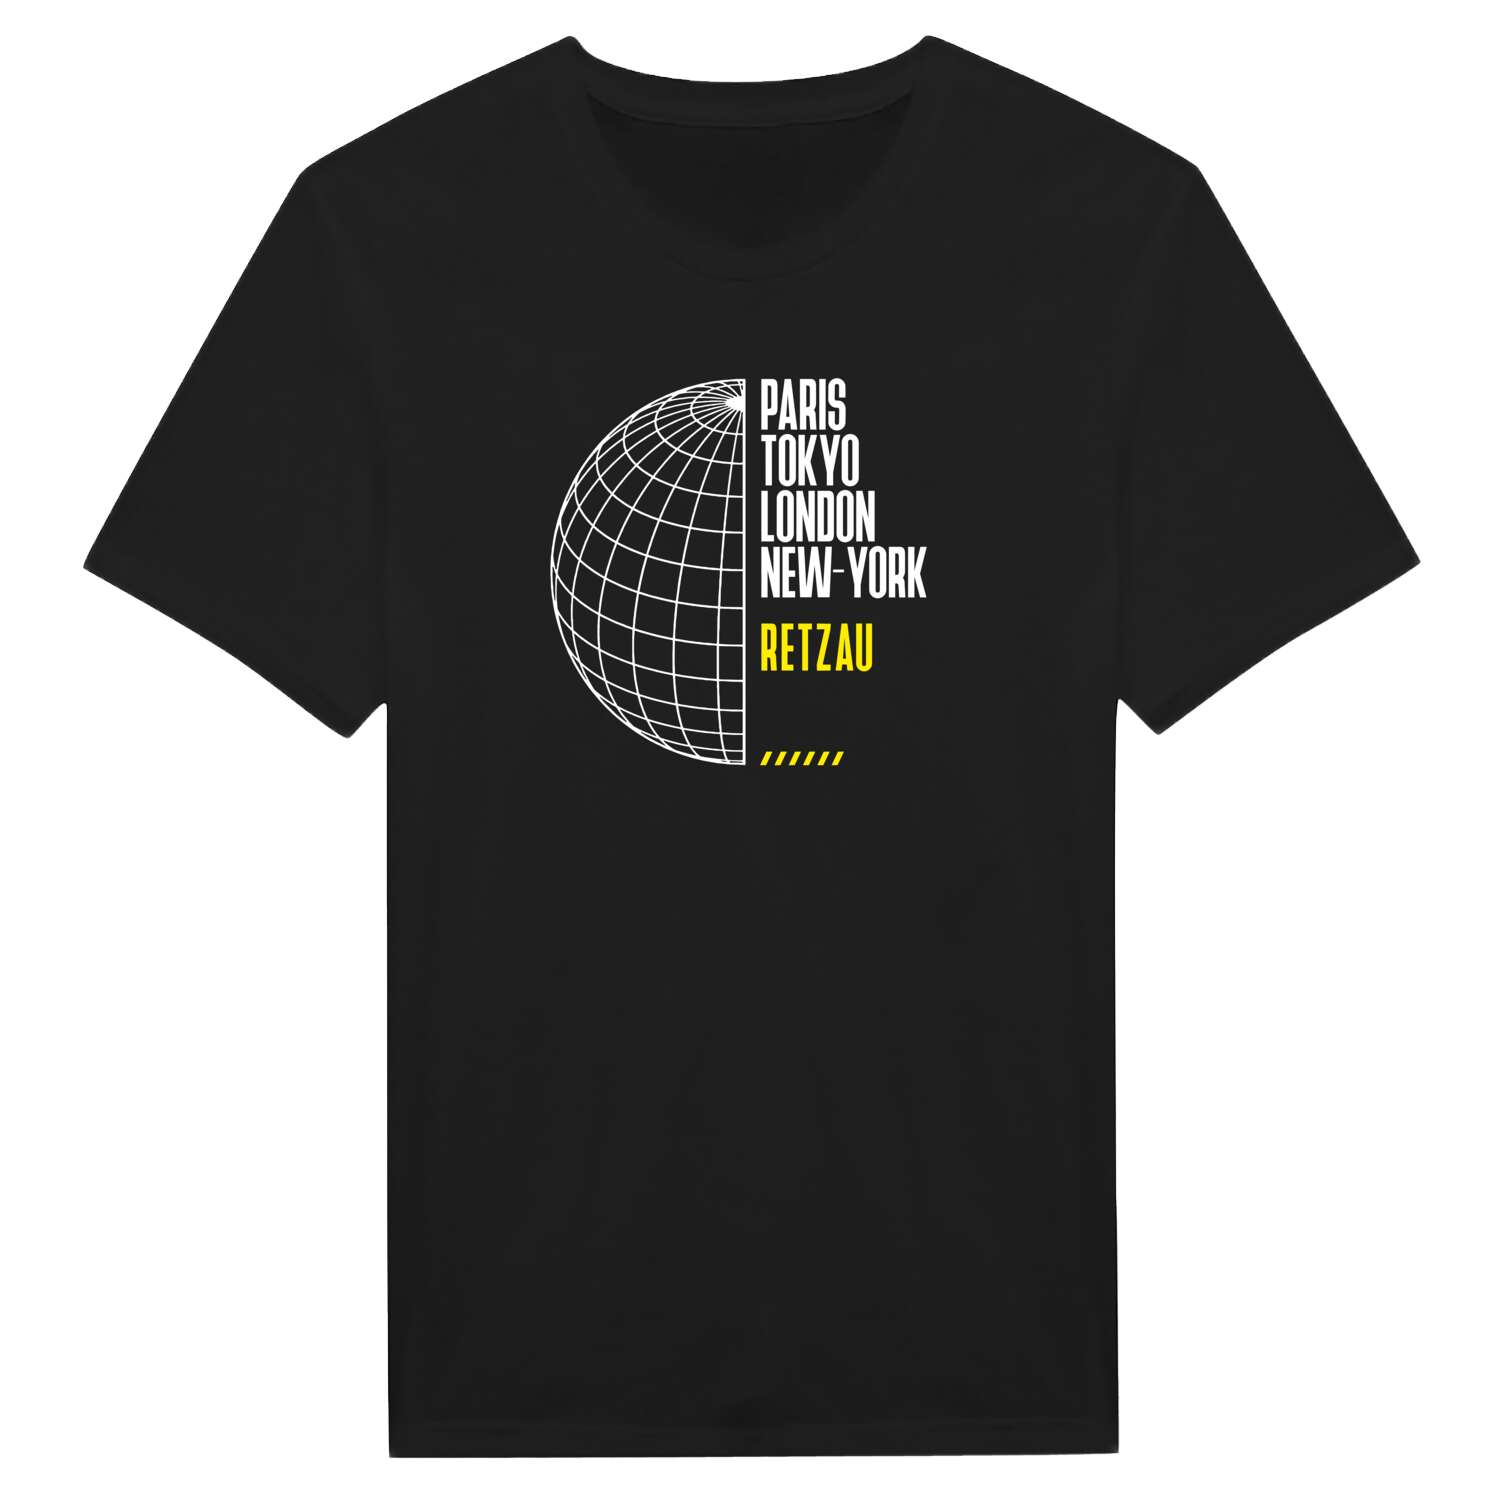 Retzau T-Shirt »Paris Tokyo London«